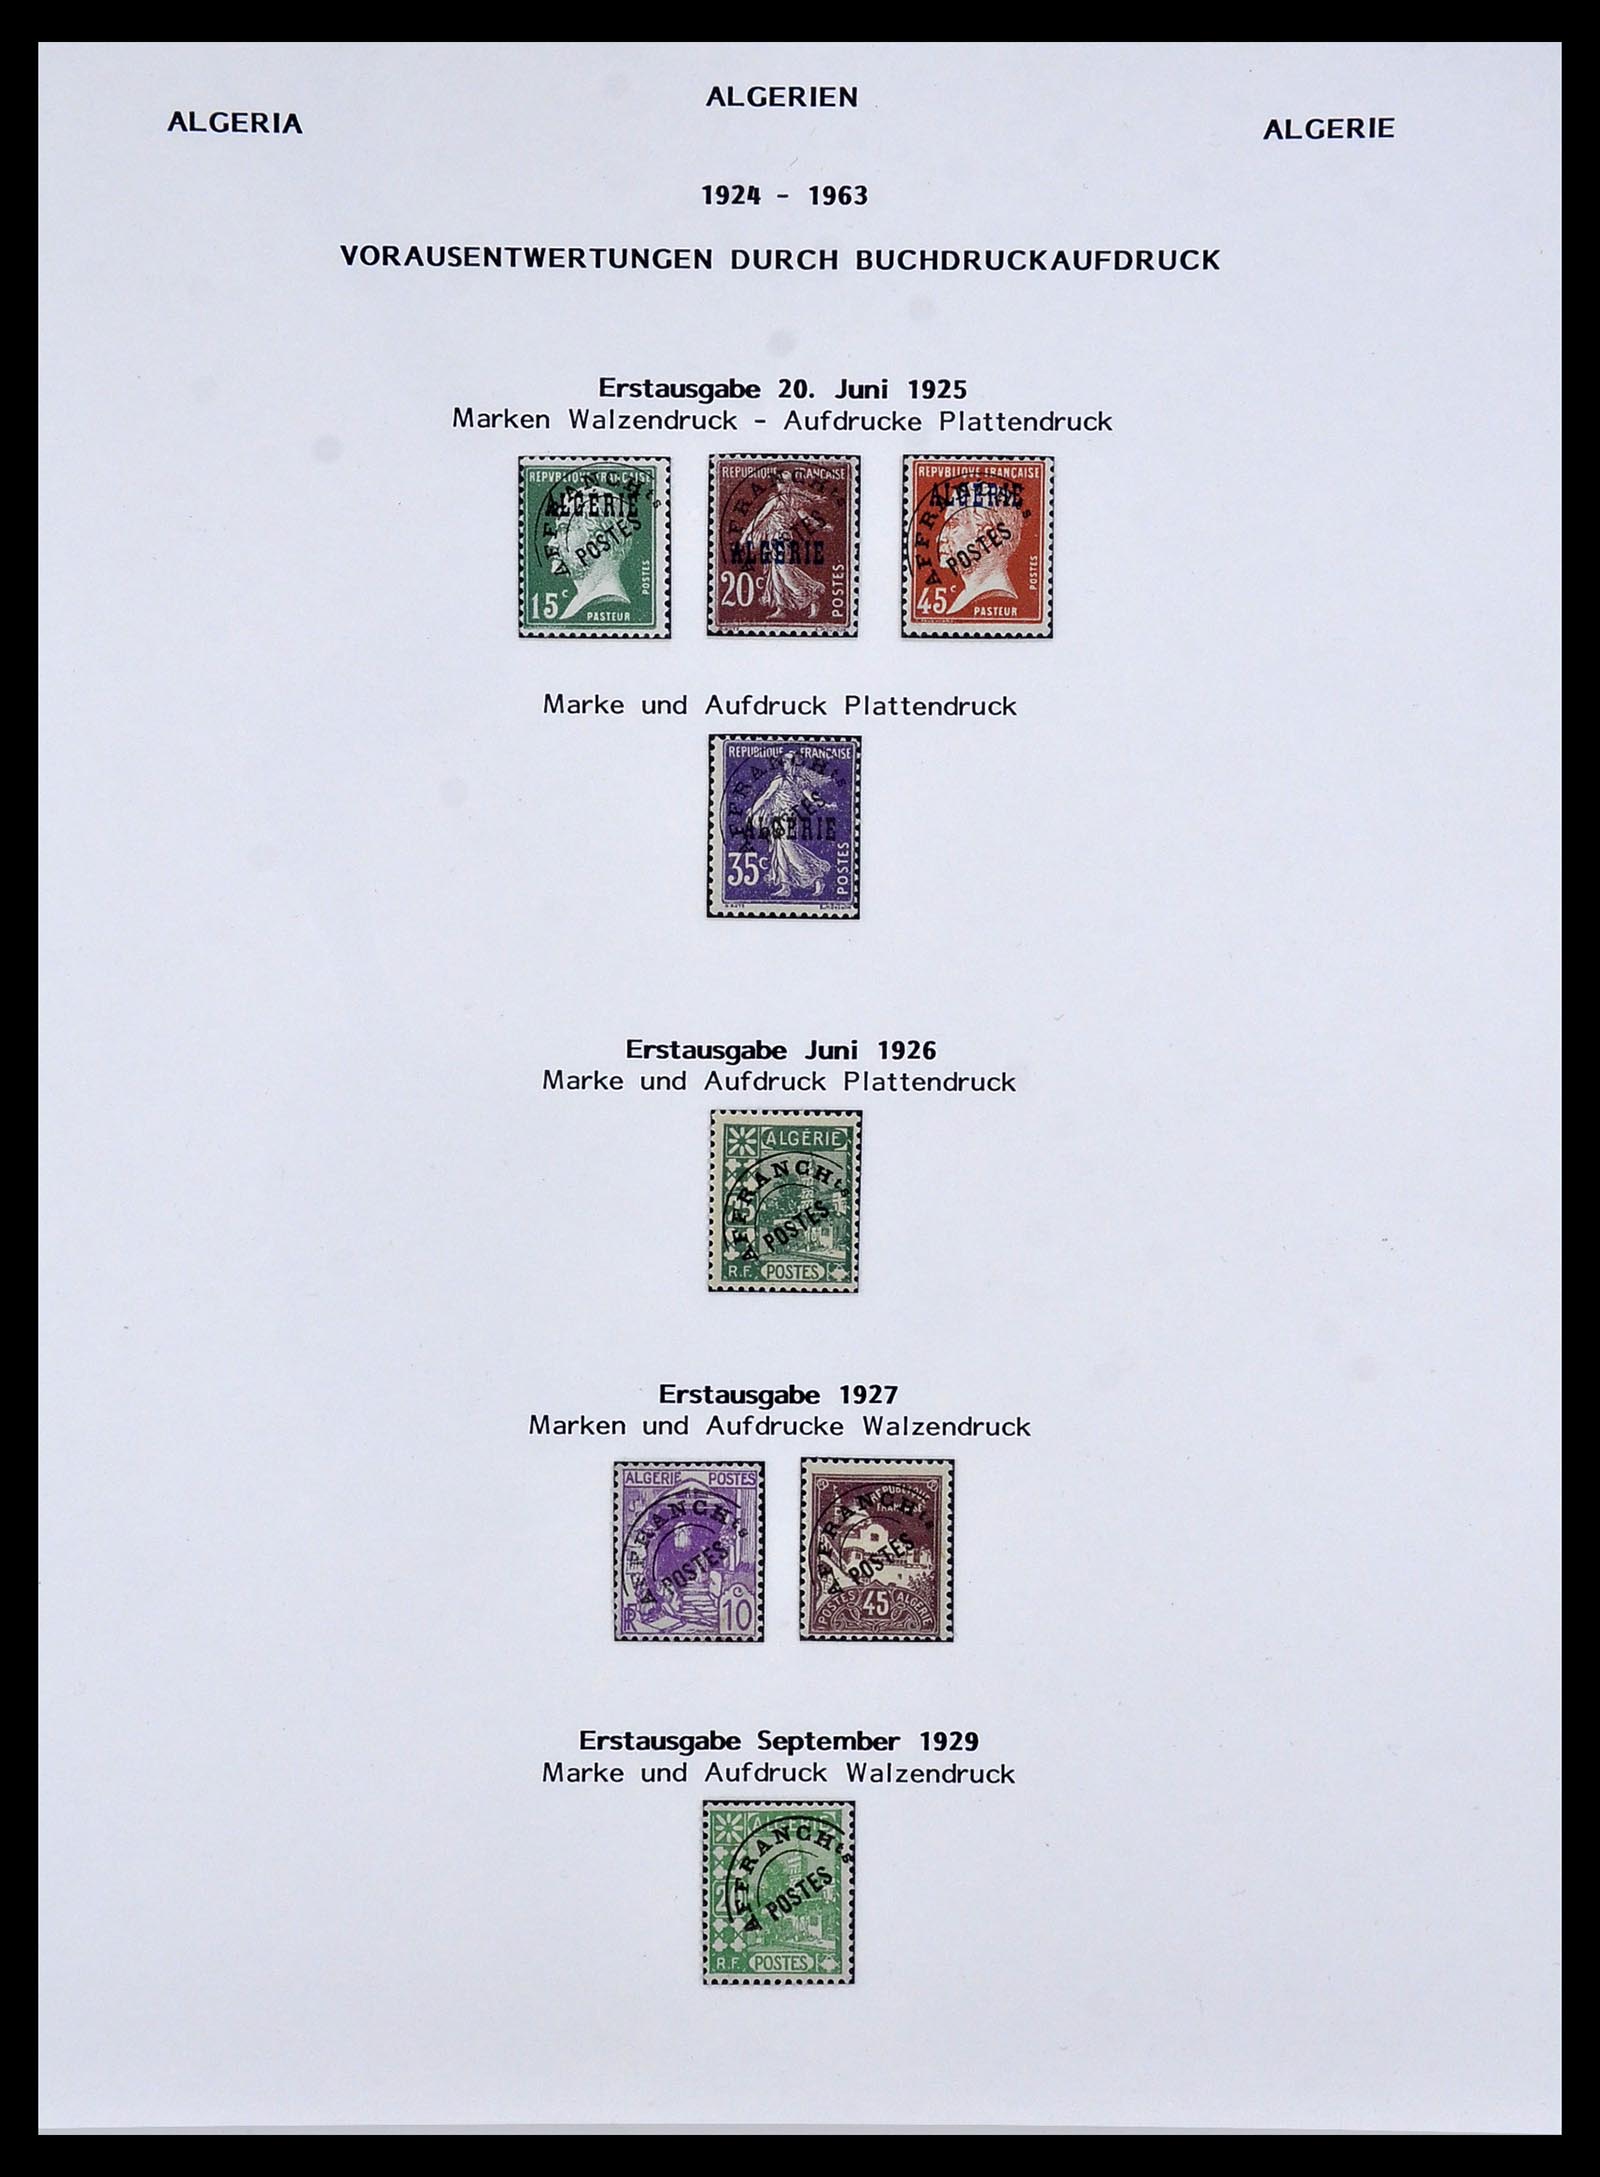 34076 002 - Stamp collection 34076 Algeria precancels 1924-1963.